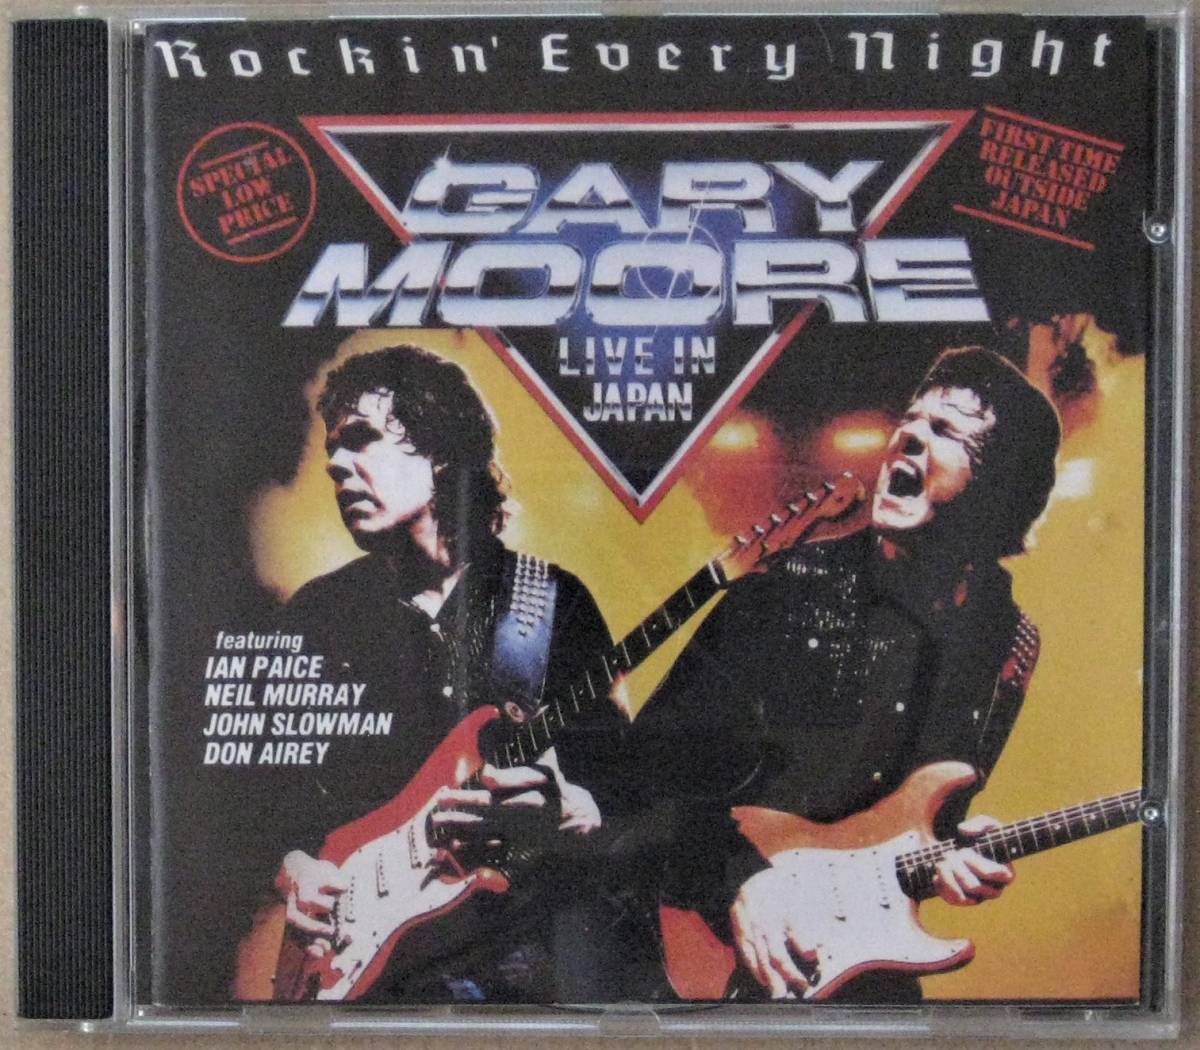 Gary Moore/ Gary * Moore <<Rockin\' Every Night(Gary Moore Live In Japan)/ жить * in * Japan >> зарубежная запись 